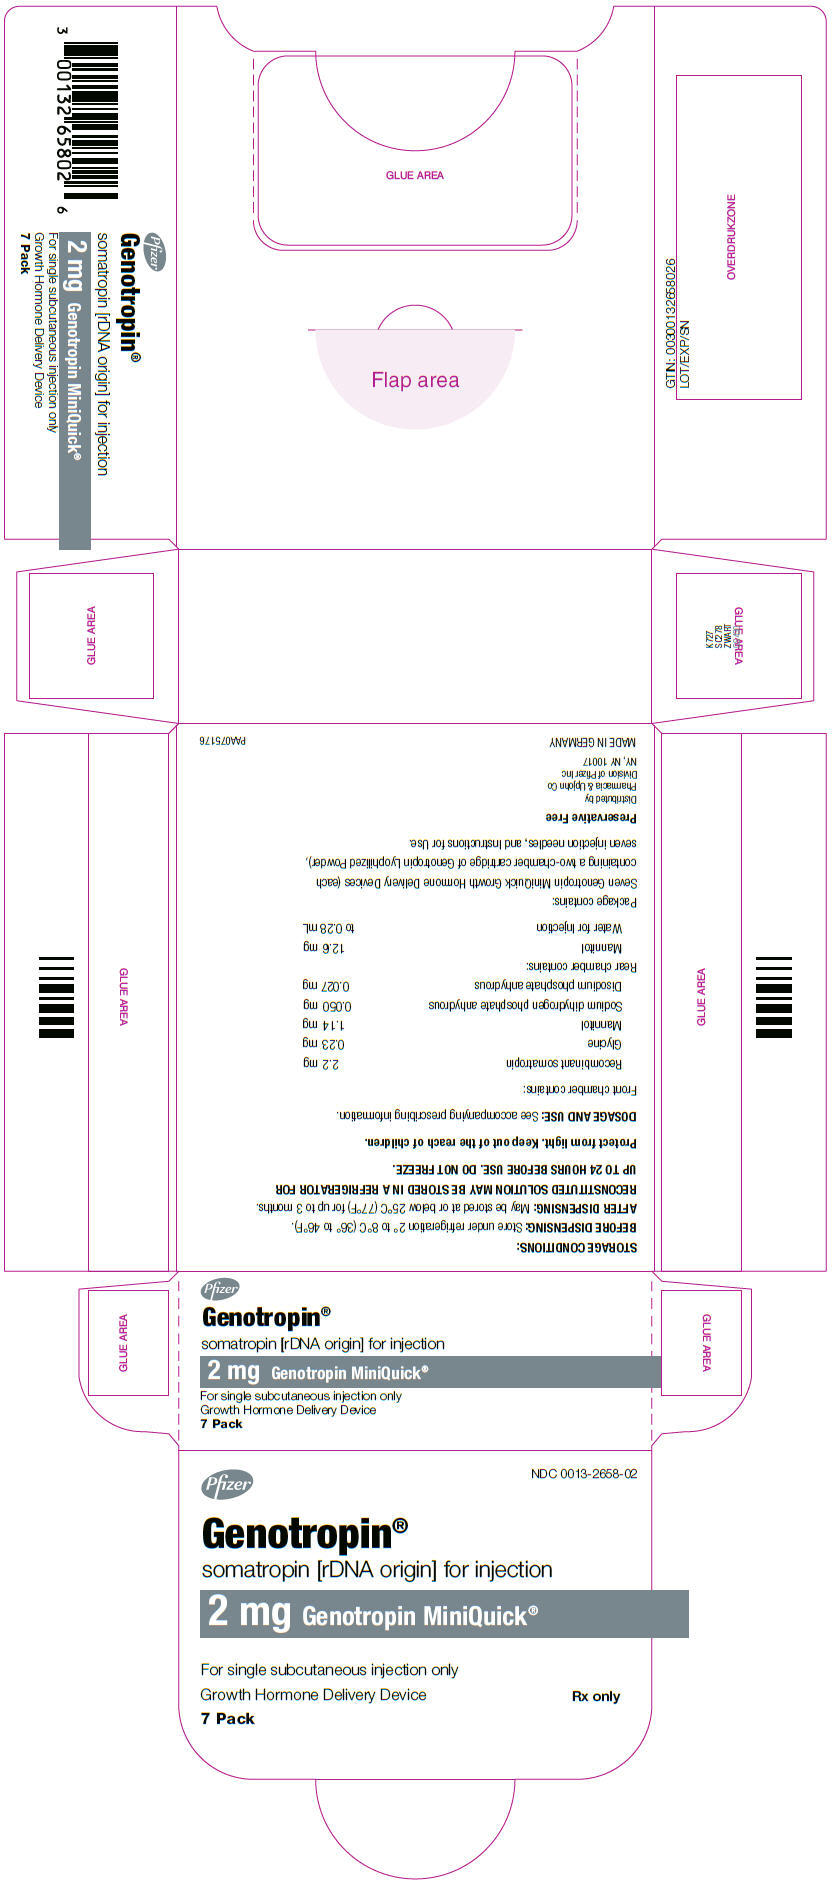 Principal Display Panel - 0.6 mg Cartridge Label